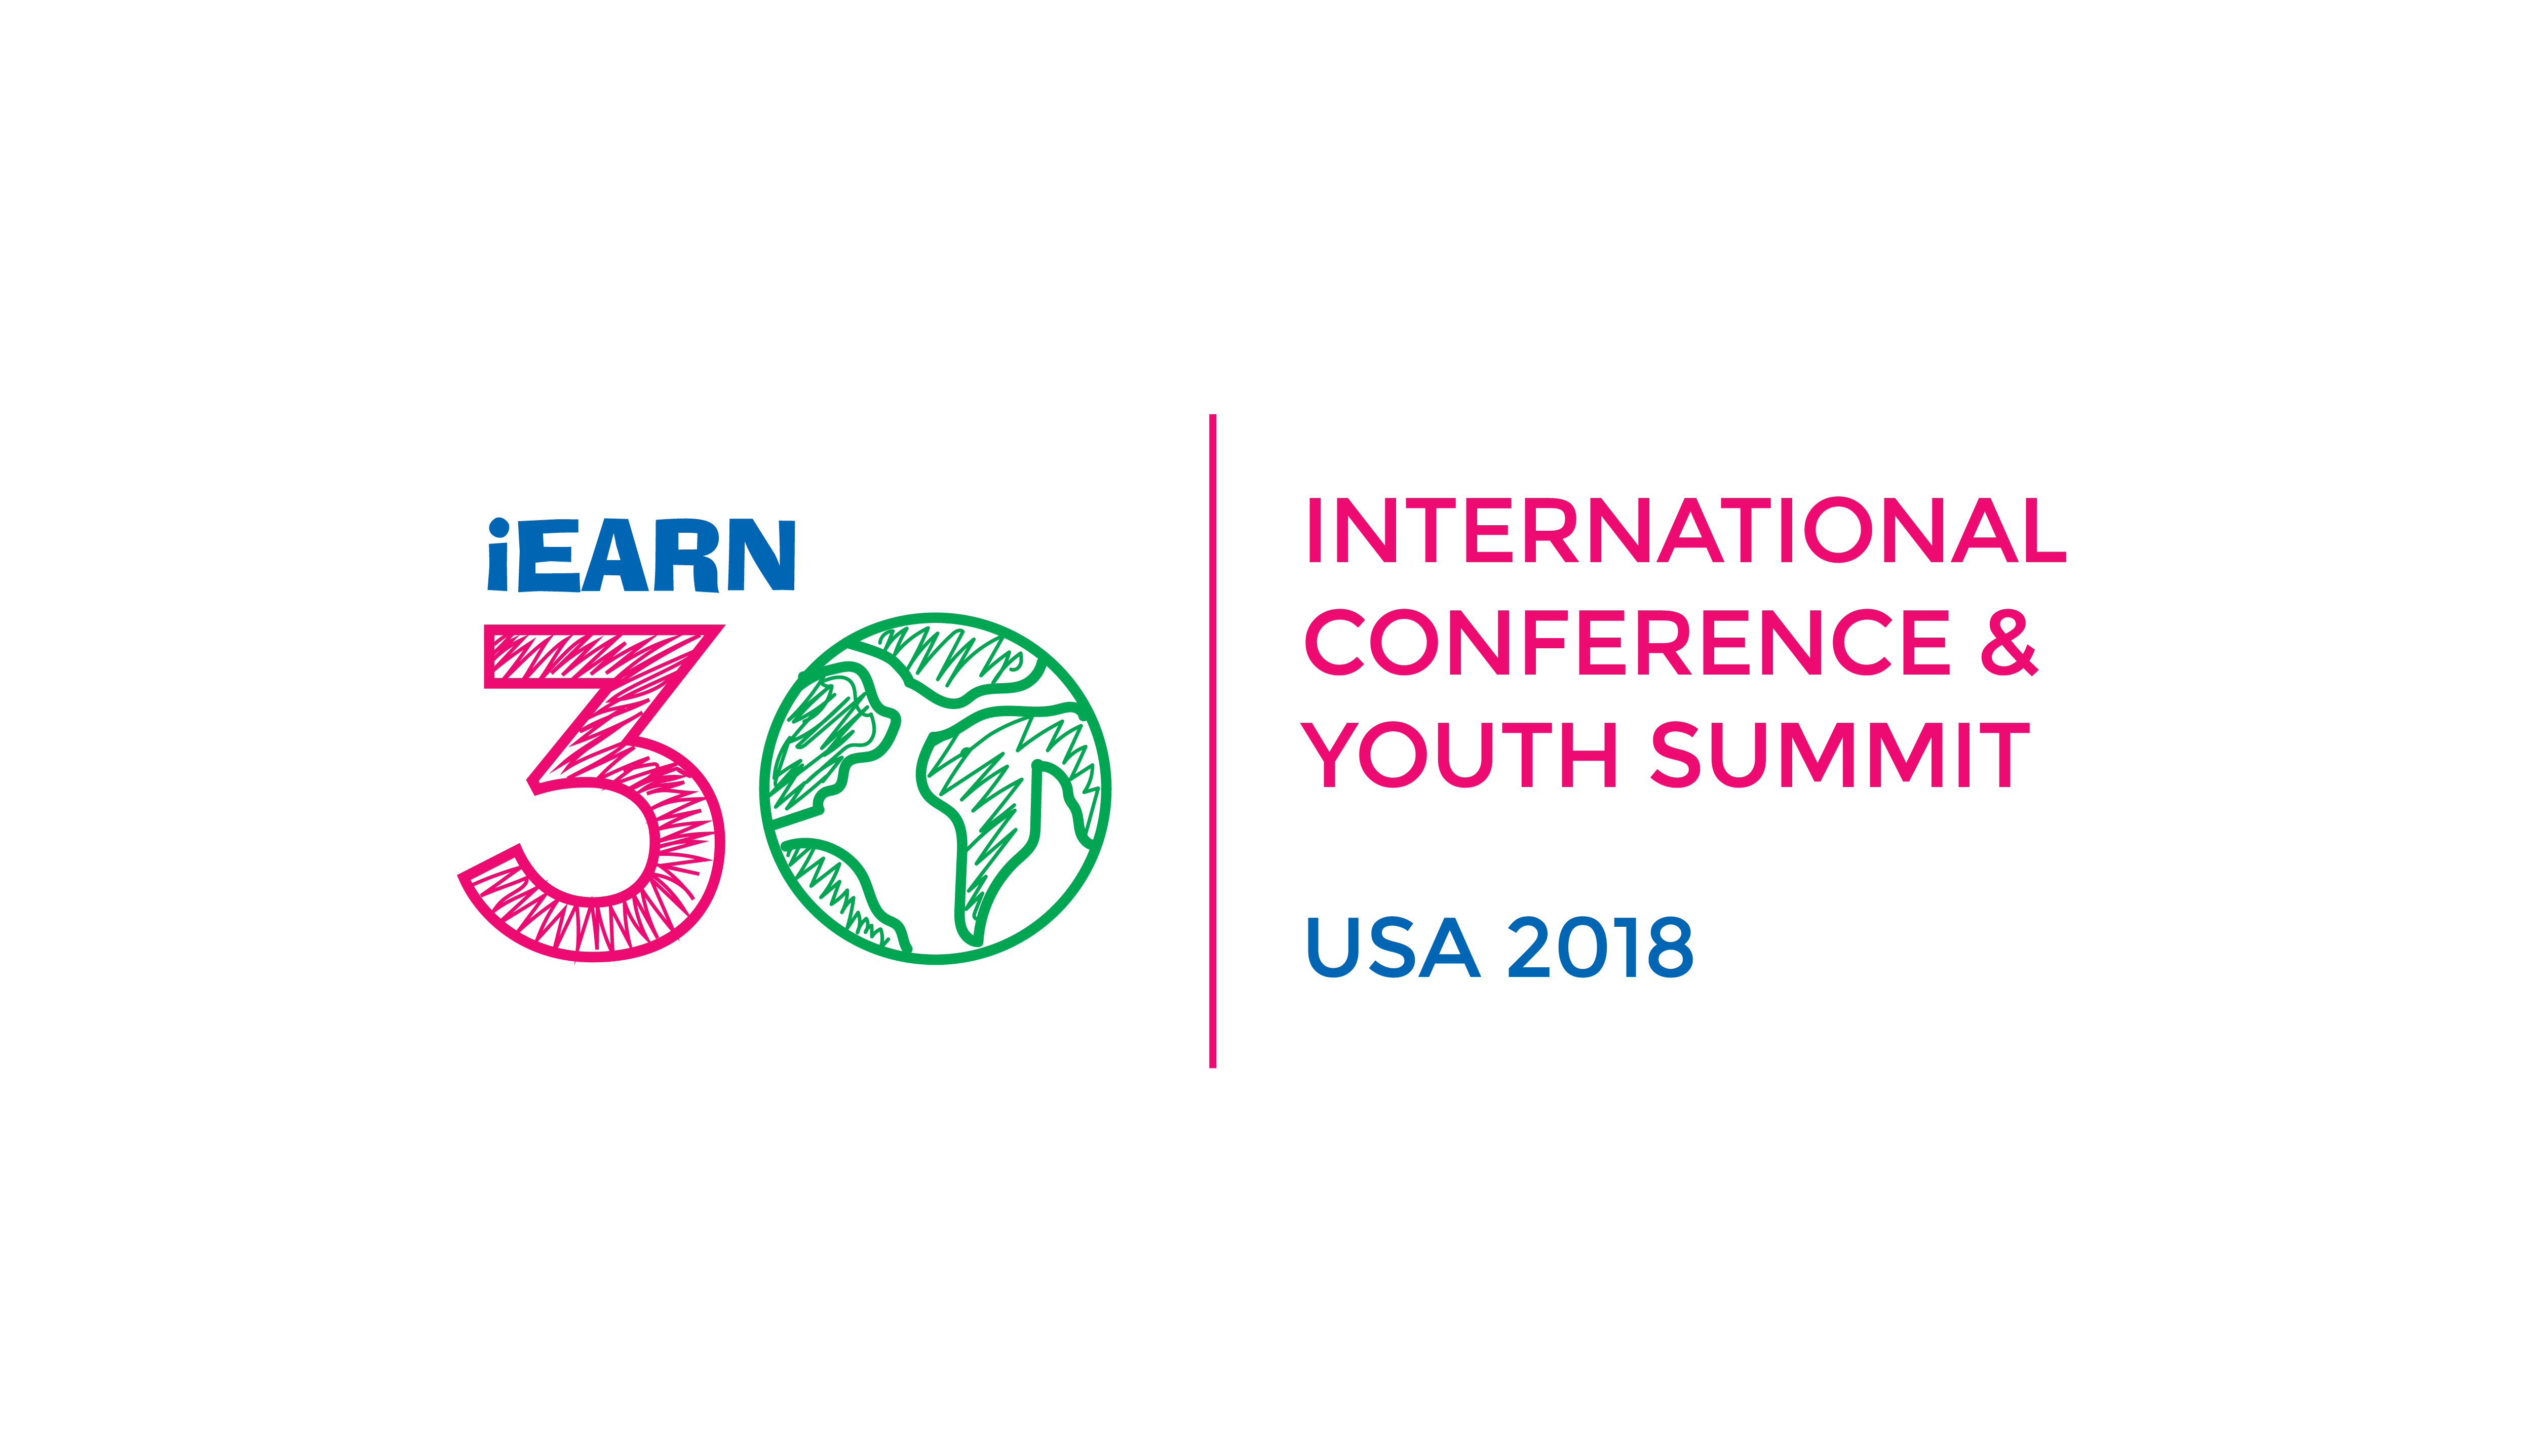 iEARN-USA 2018 Conference Logo